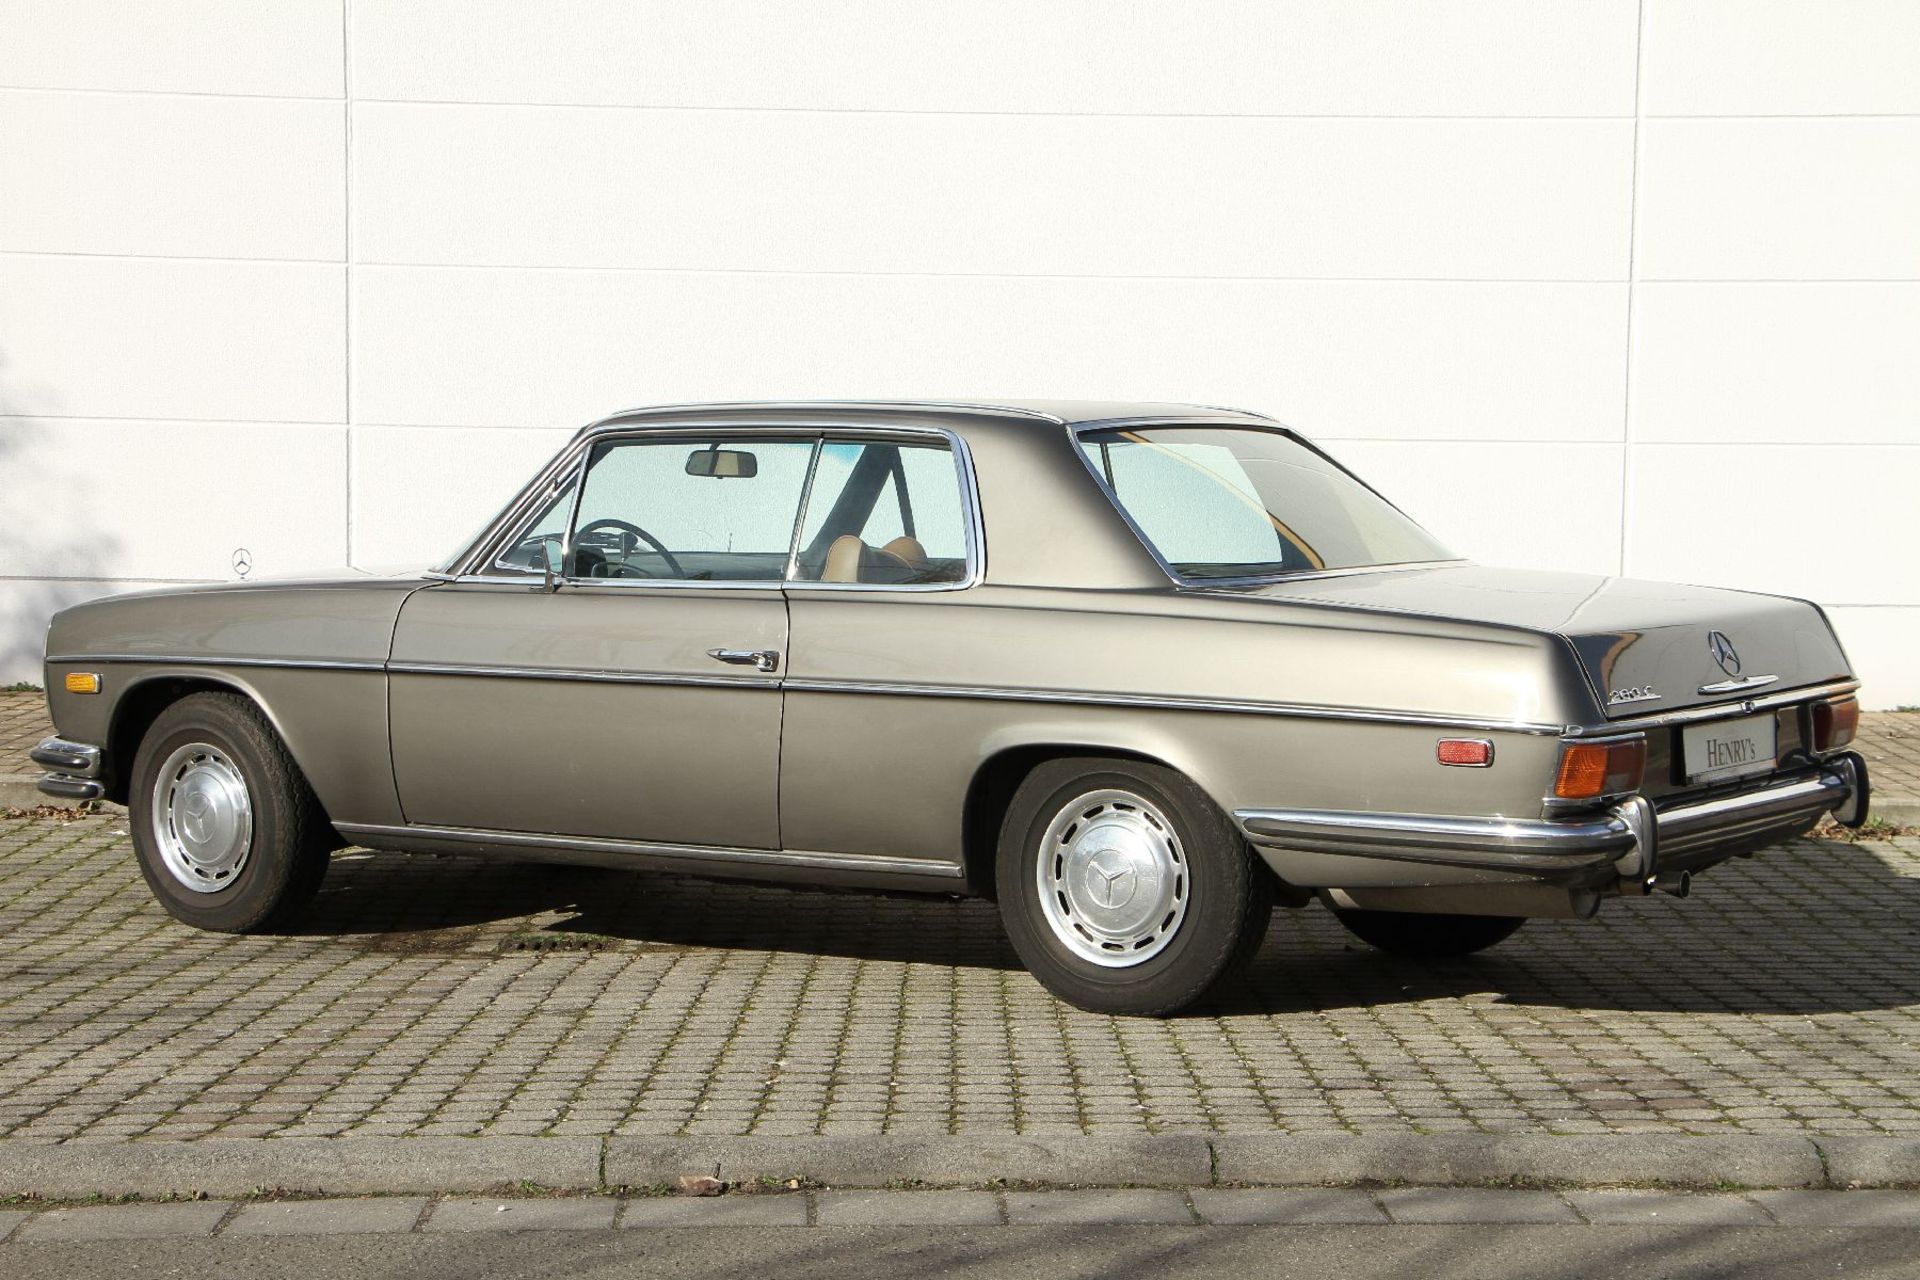 Mercedes-Benz 280 Coupé, Chassis Number: 11407312002203, first registered 07/1973, former US - Bild 4 aus 14